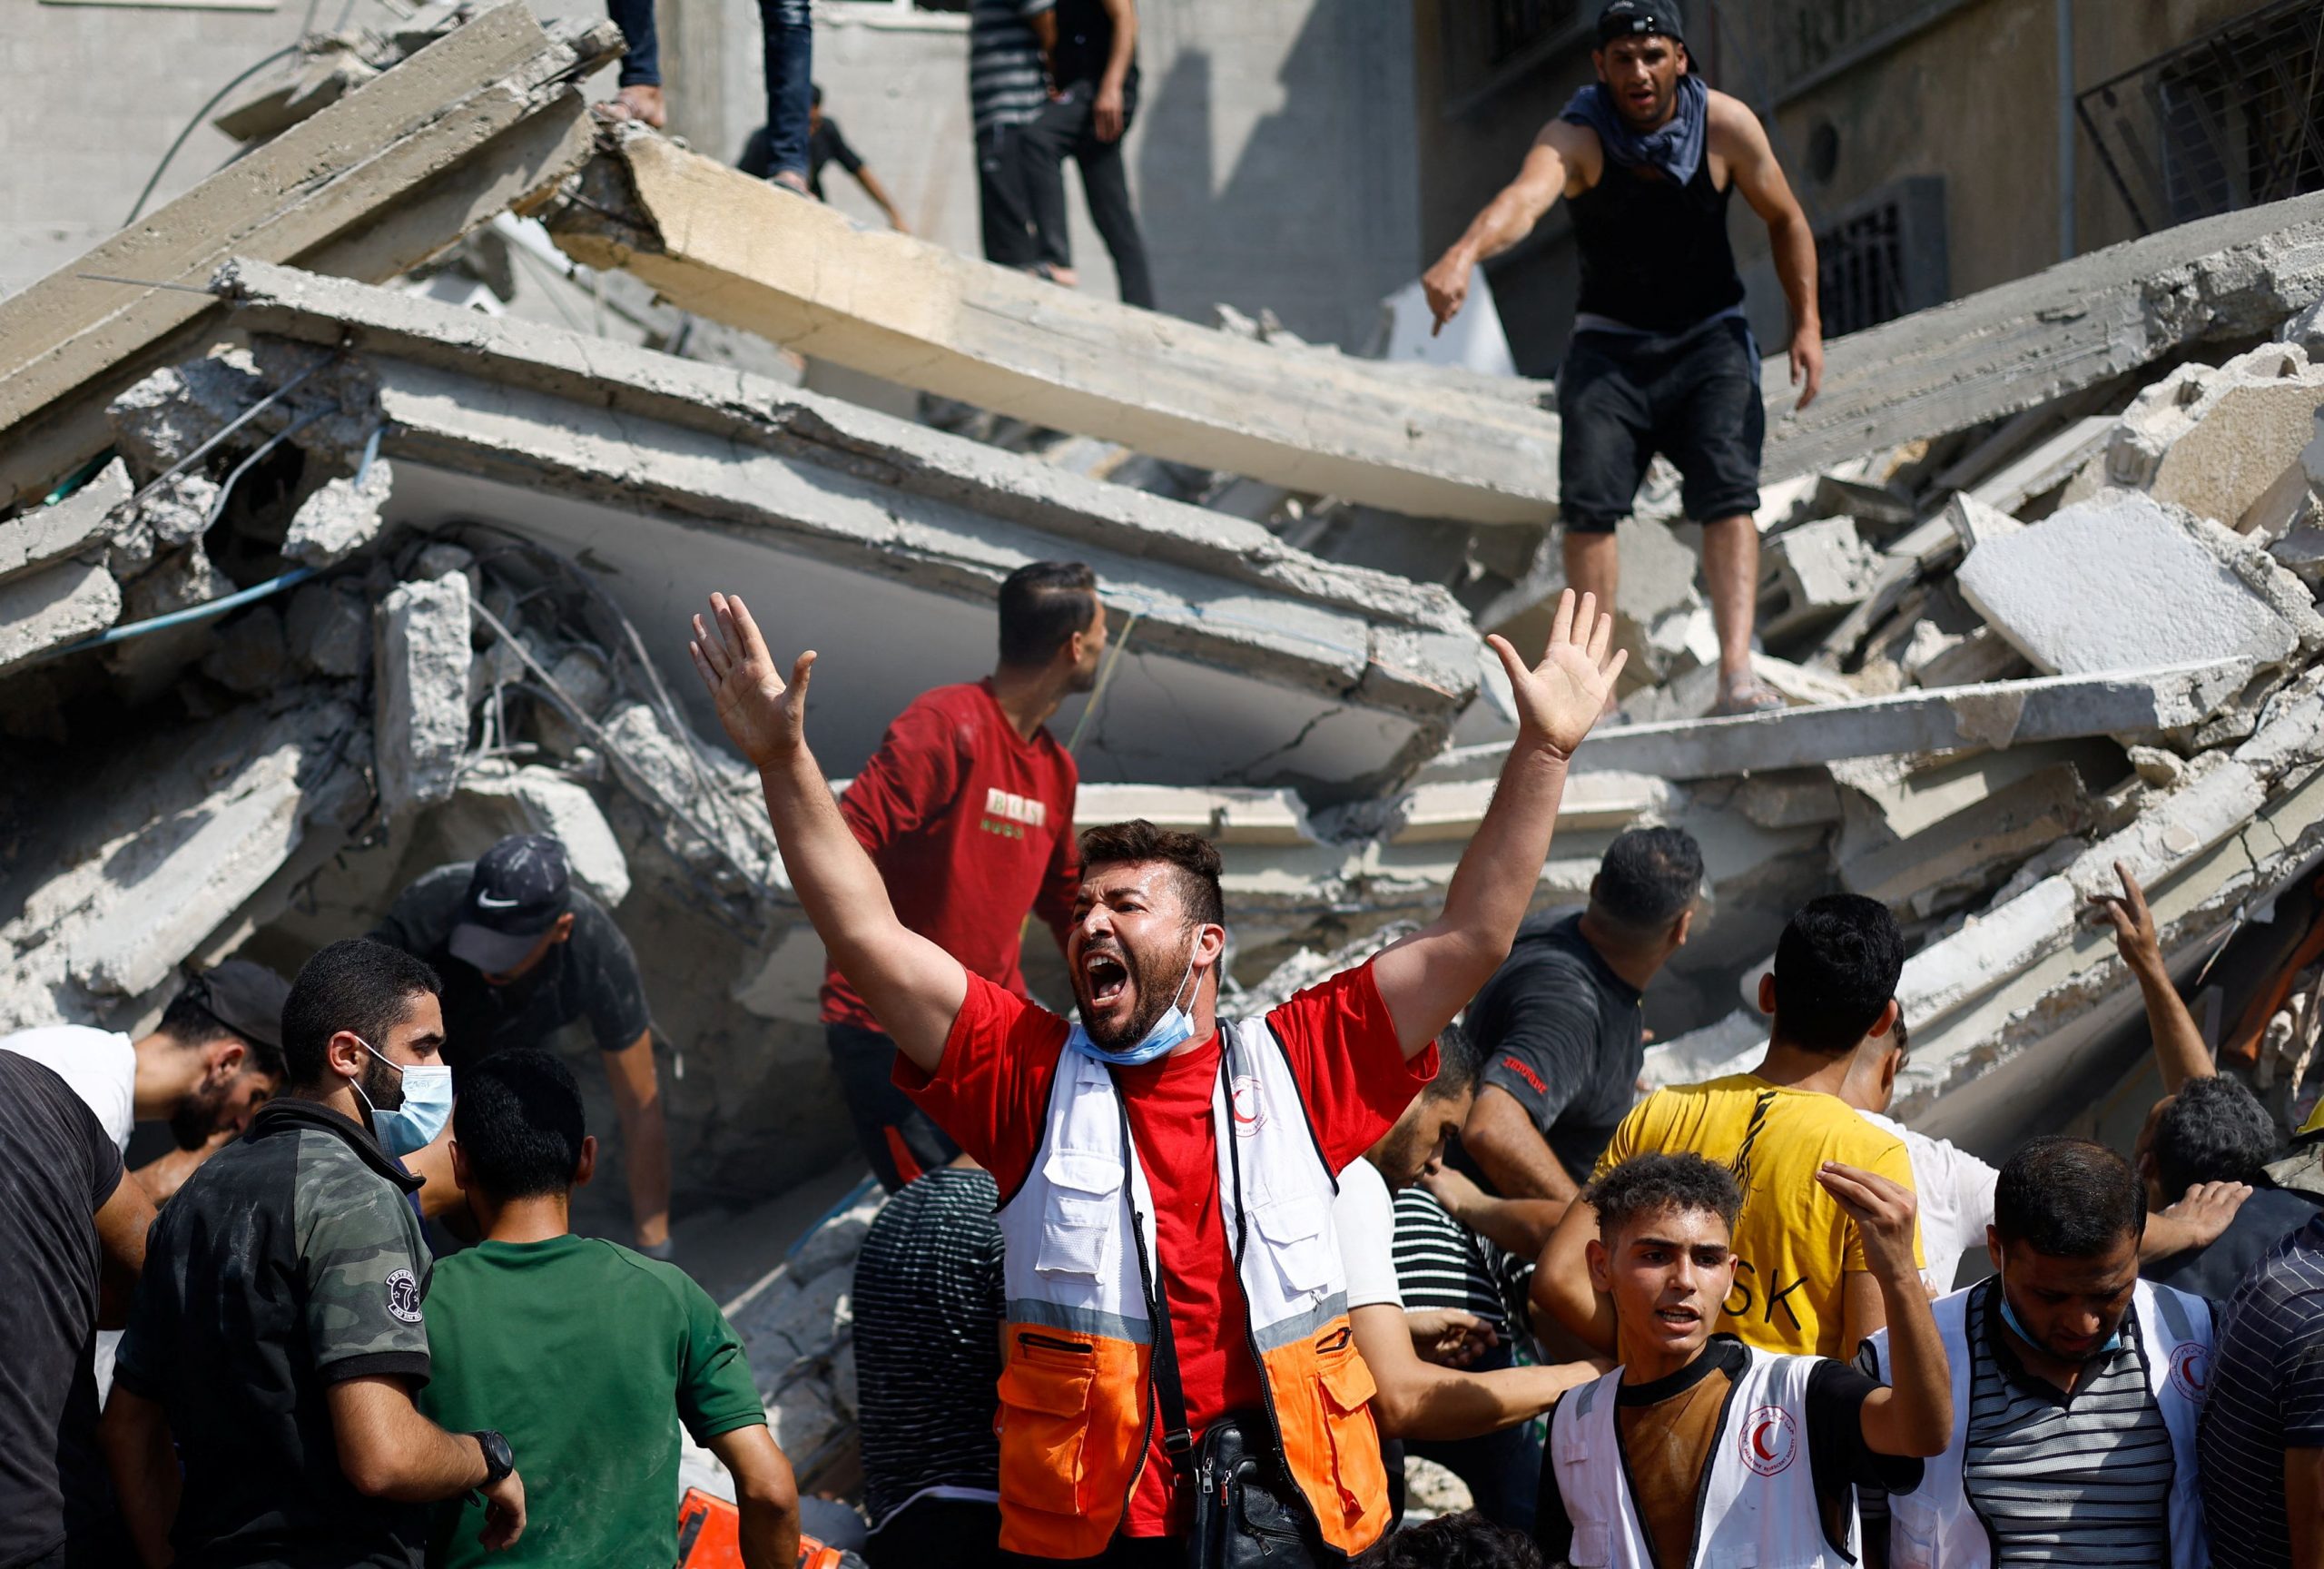 Live οι εξελίξεις σε Ισραήλ και Γάζα: Bομβαρδισμοί στη Γάζα, ρουκέτες στο Τελ Αβίβ – «Σύντομα η επόμενη φάση» λέει ο Νετανιάχου